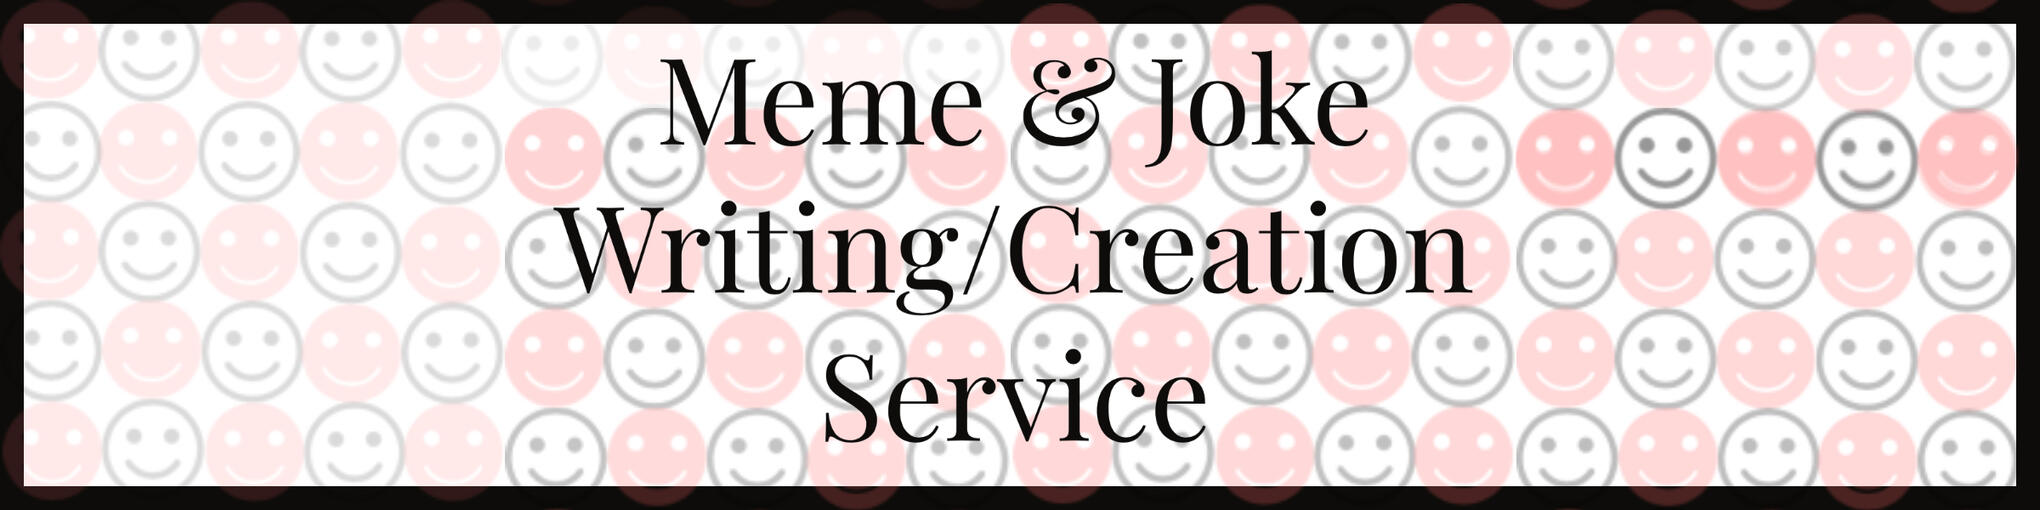 Profile P Memes & Jokes Writing/Creation Service